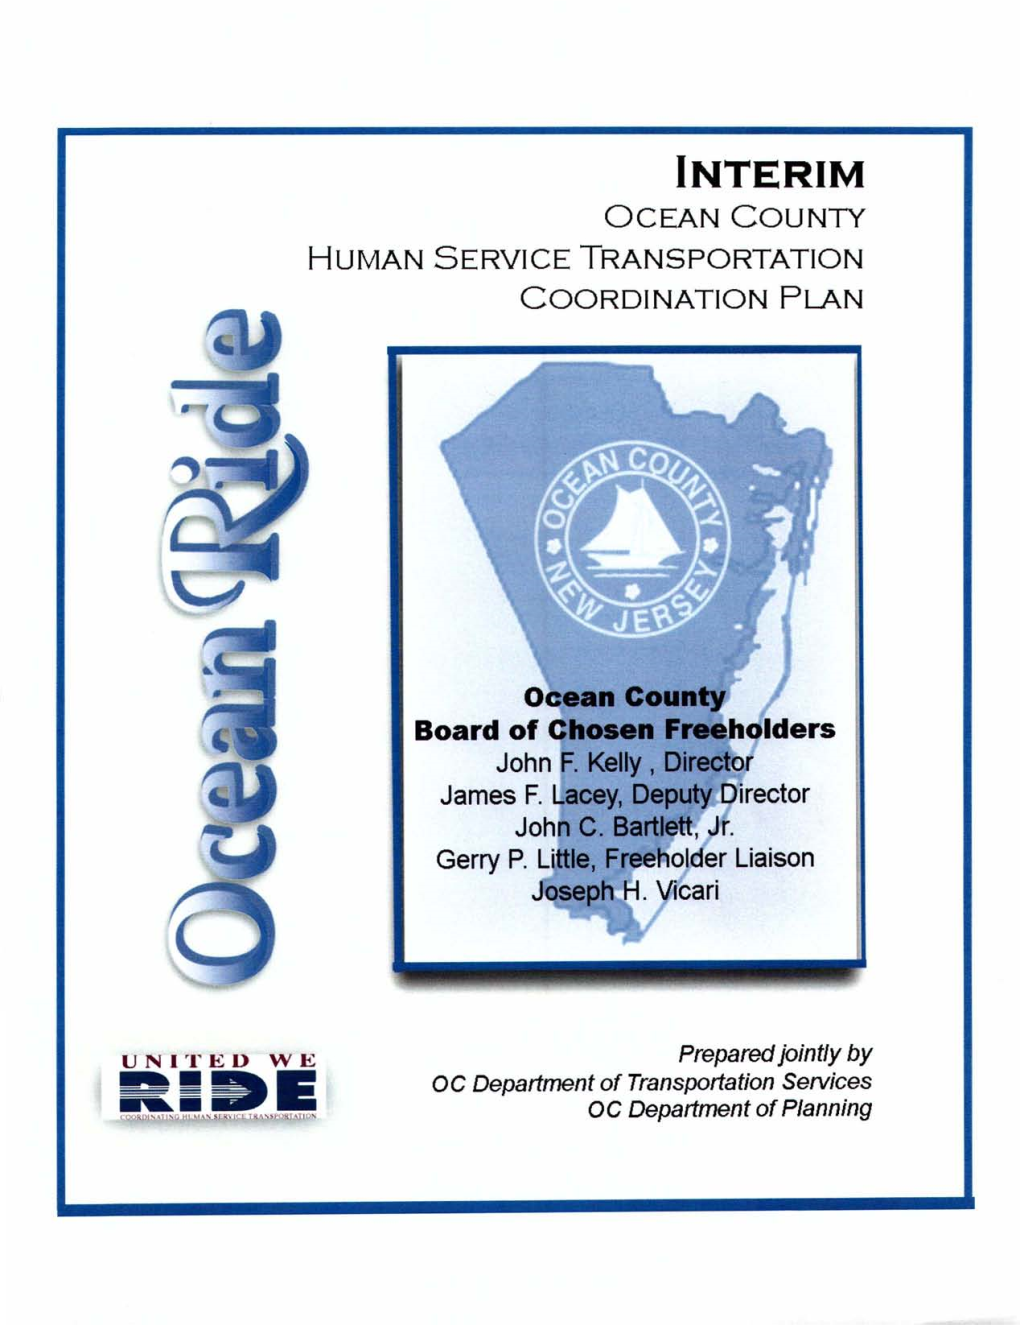 Interim Ocean County Human Service Transportation Coordination Plan